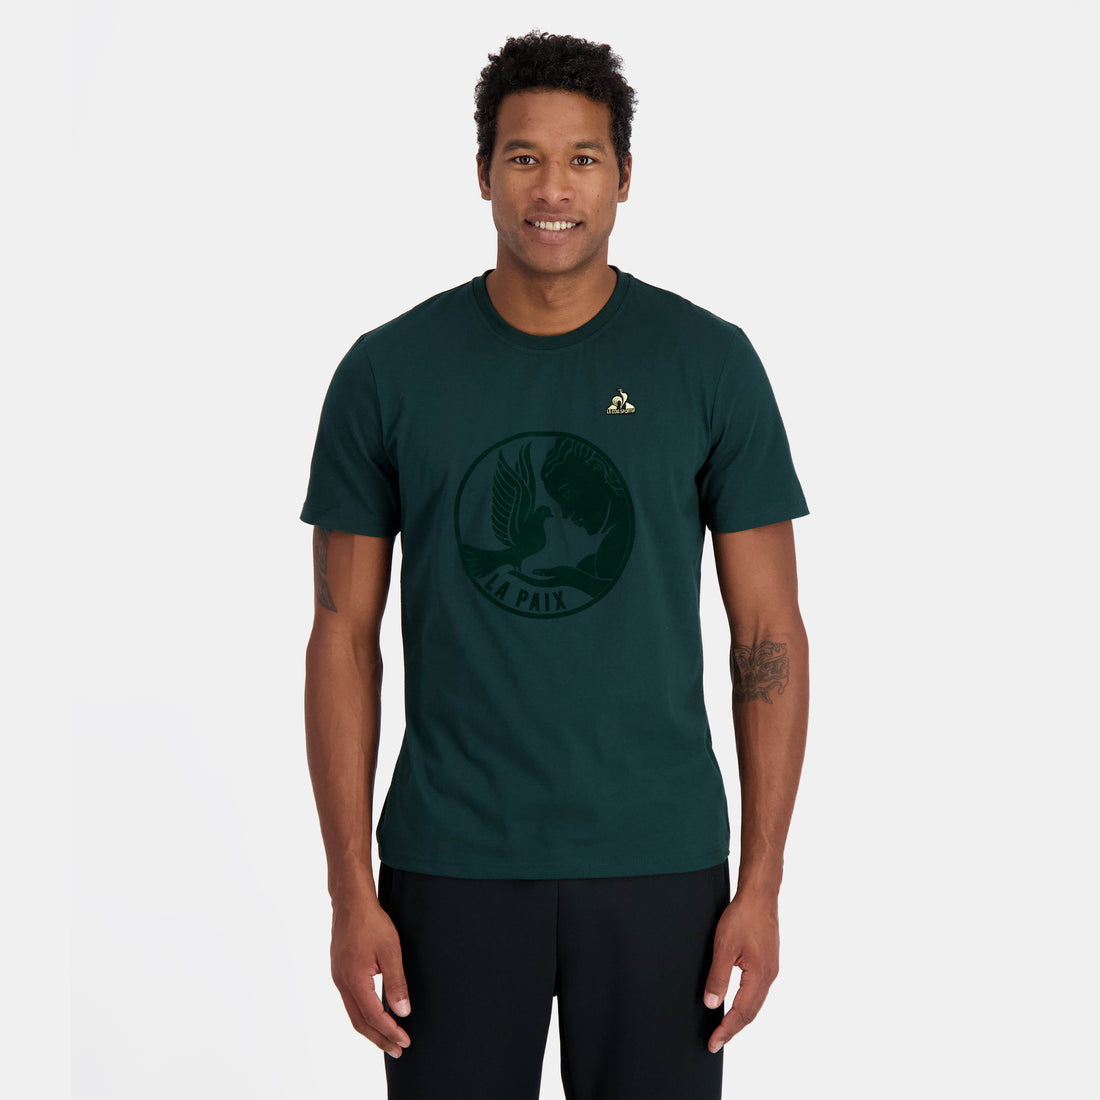 2411175-LA PAIX Tee SS N°1 M scarab | T-shirt motif «La Paix»  Homme